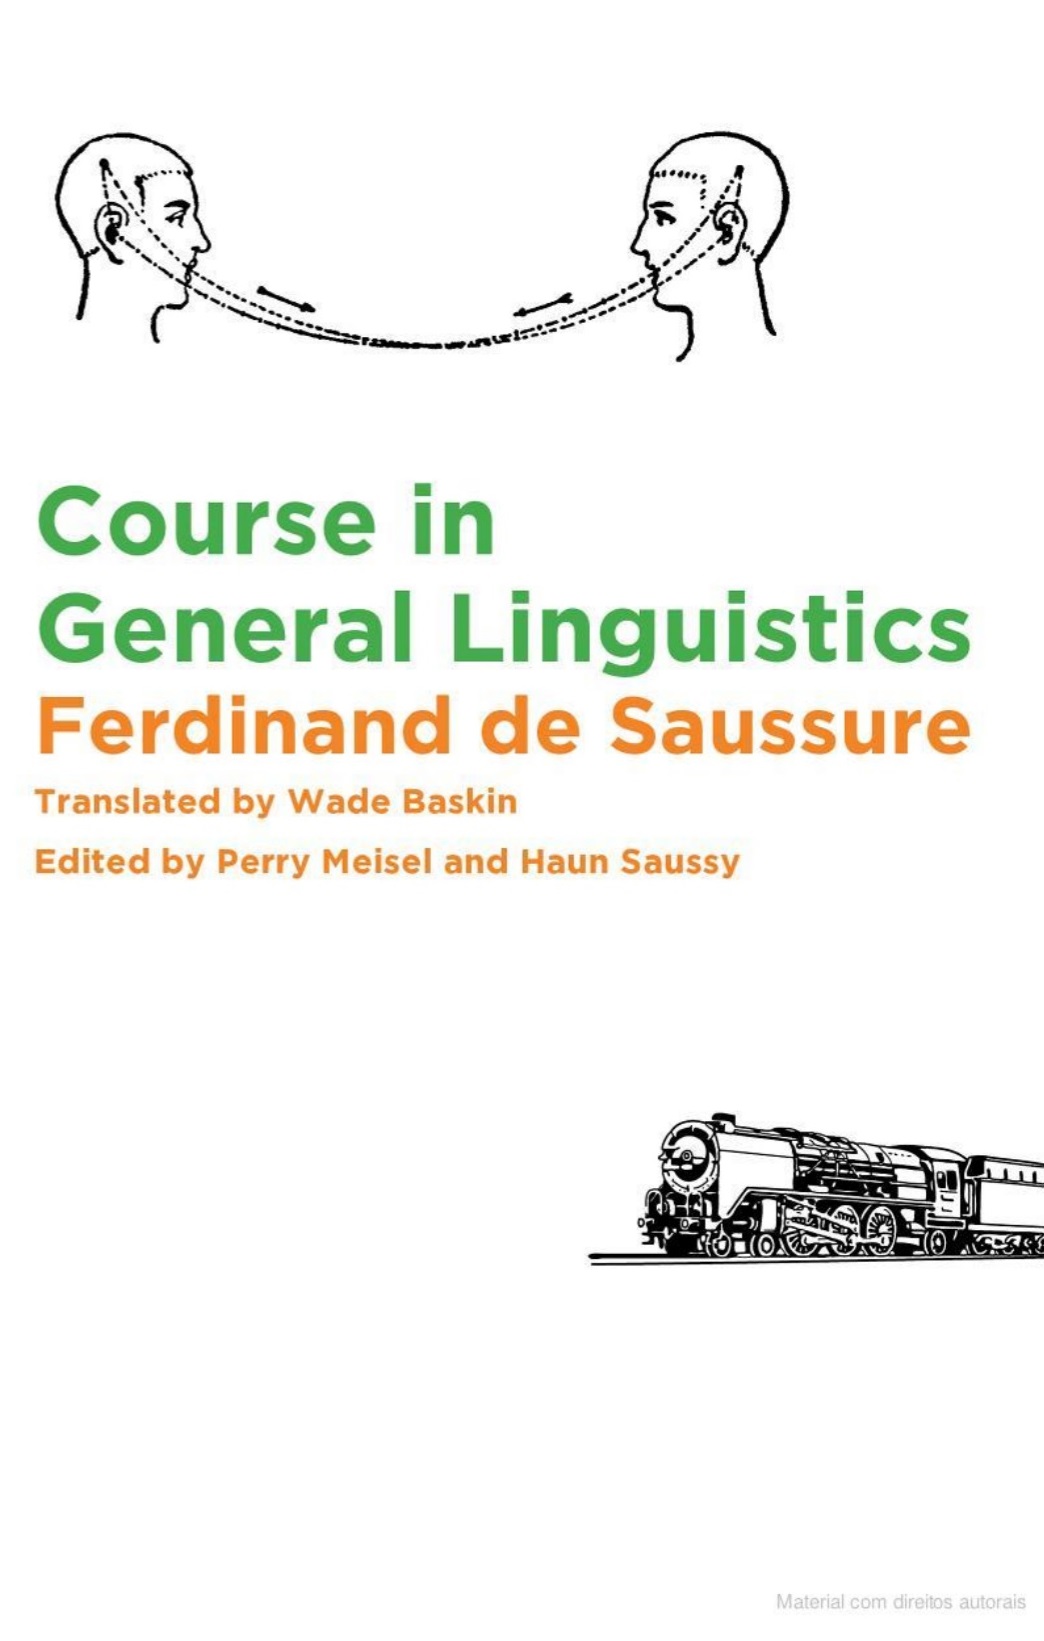 Ferdinand-saussure-course-in-general-linguistics-theoryleaks.jpg